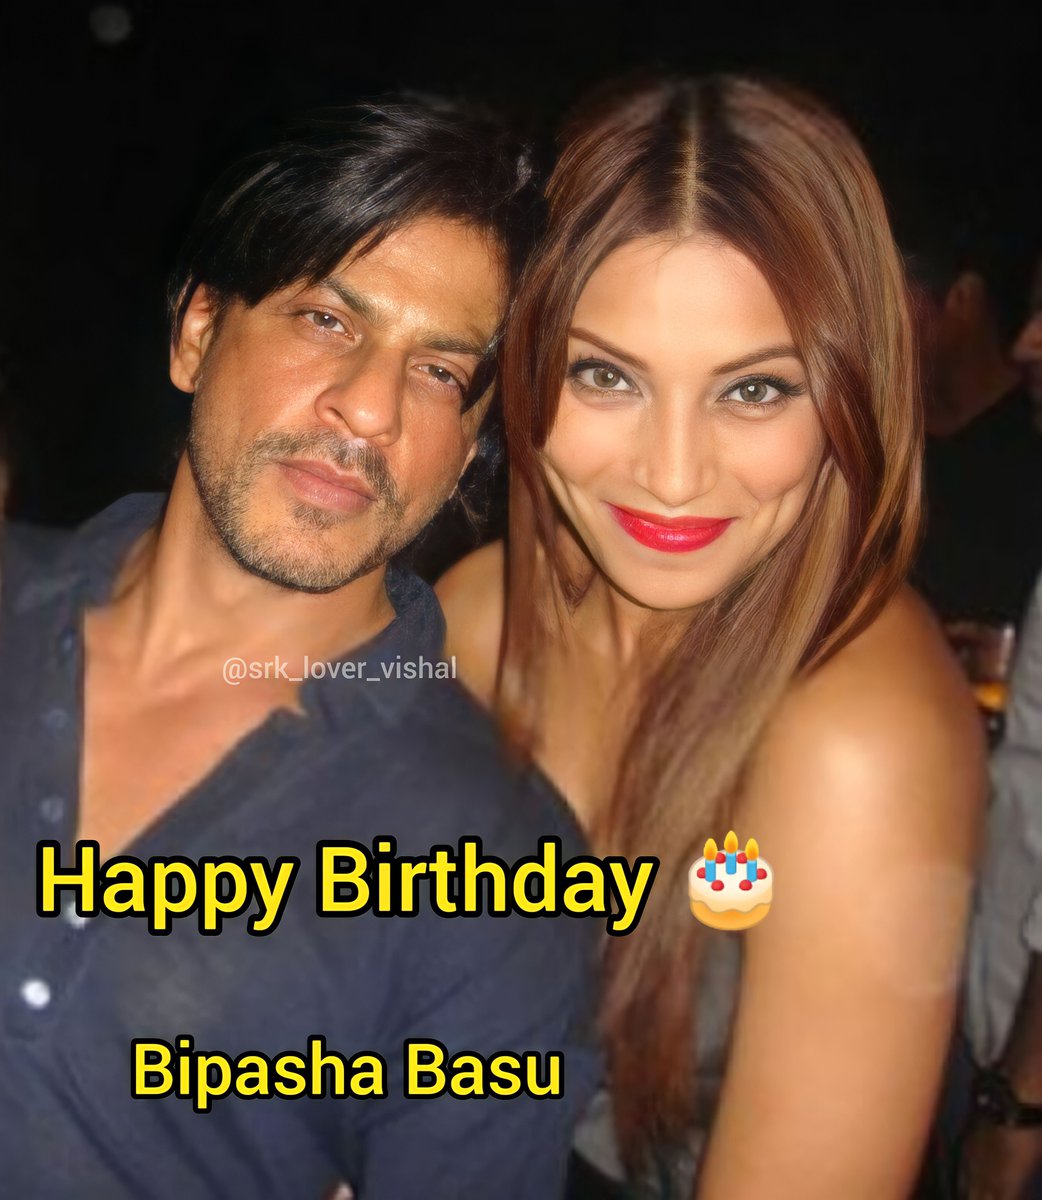 Happy Birthday most hot & gorgeous Actress @bipsluvurself mam...🎂❤️

@iamsrk 🎂 @bipsluvurself

#happybirthdaybipashabasu #BipashaBasuBirthday #BipashaBasu #ShahRukhKhan    #Bollywood  #actress #bday #Birthday  #HappyBirthday #srklovervishal